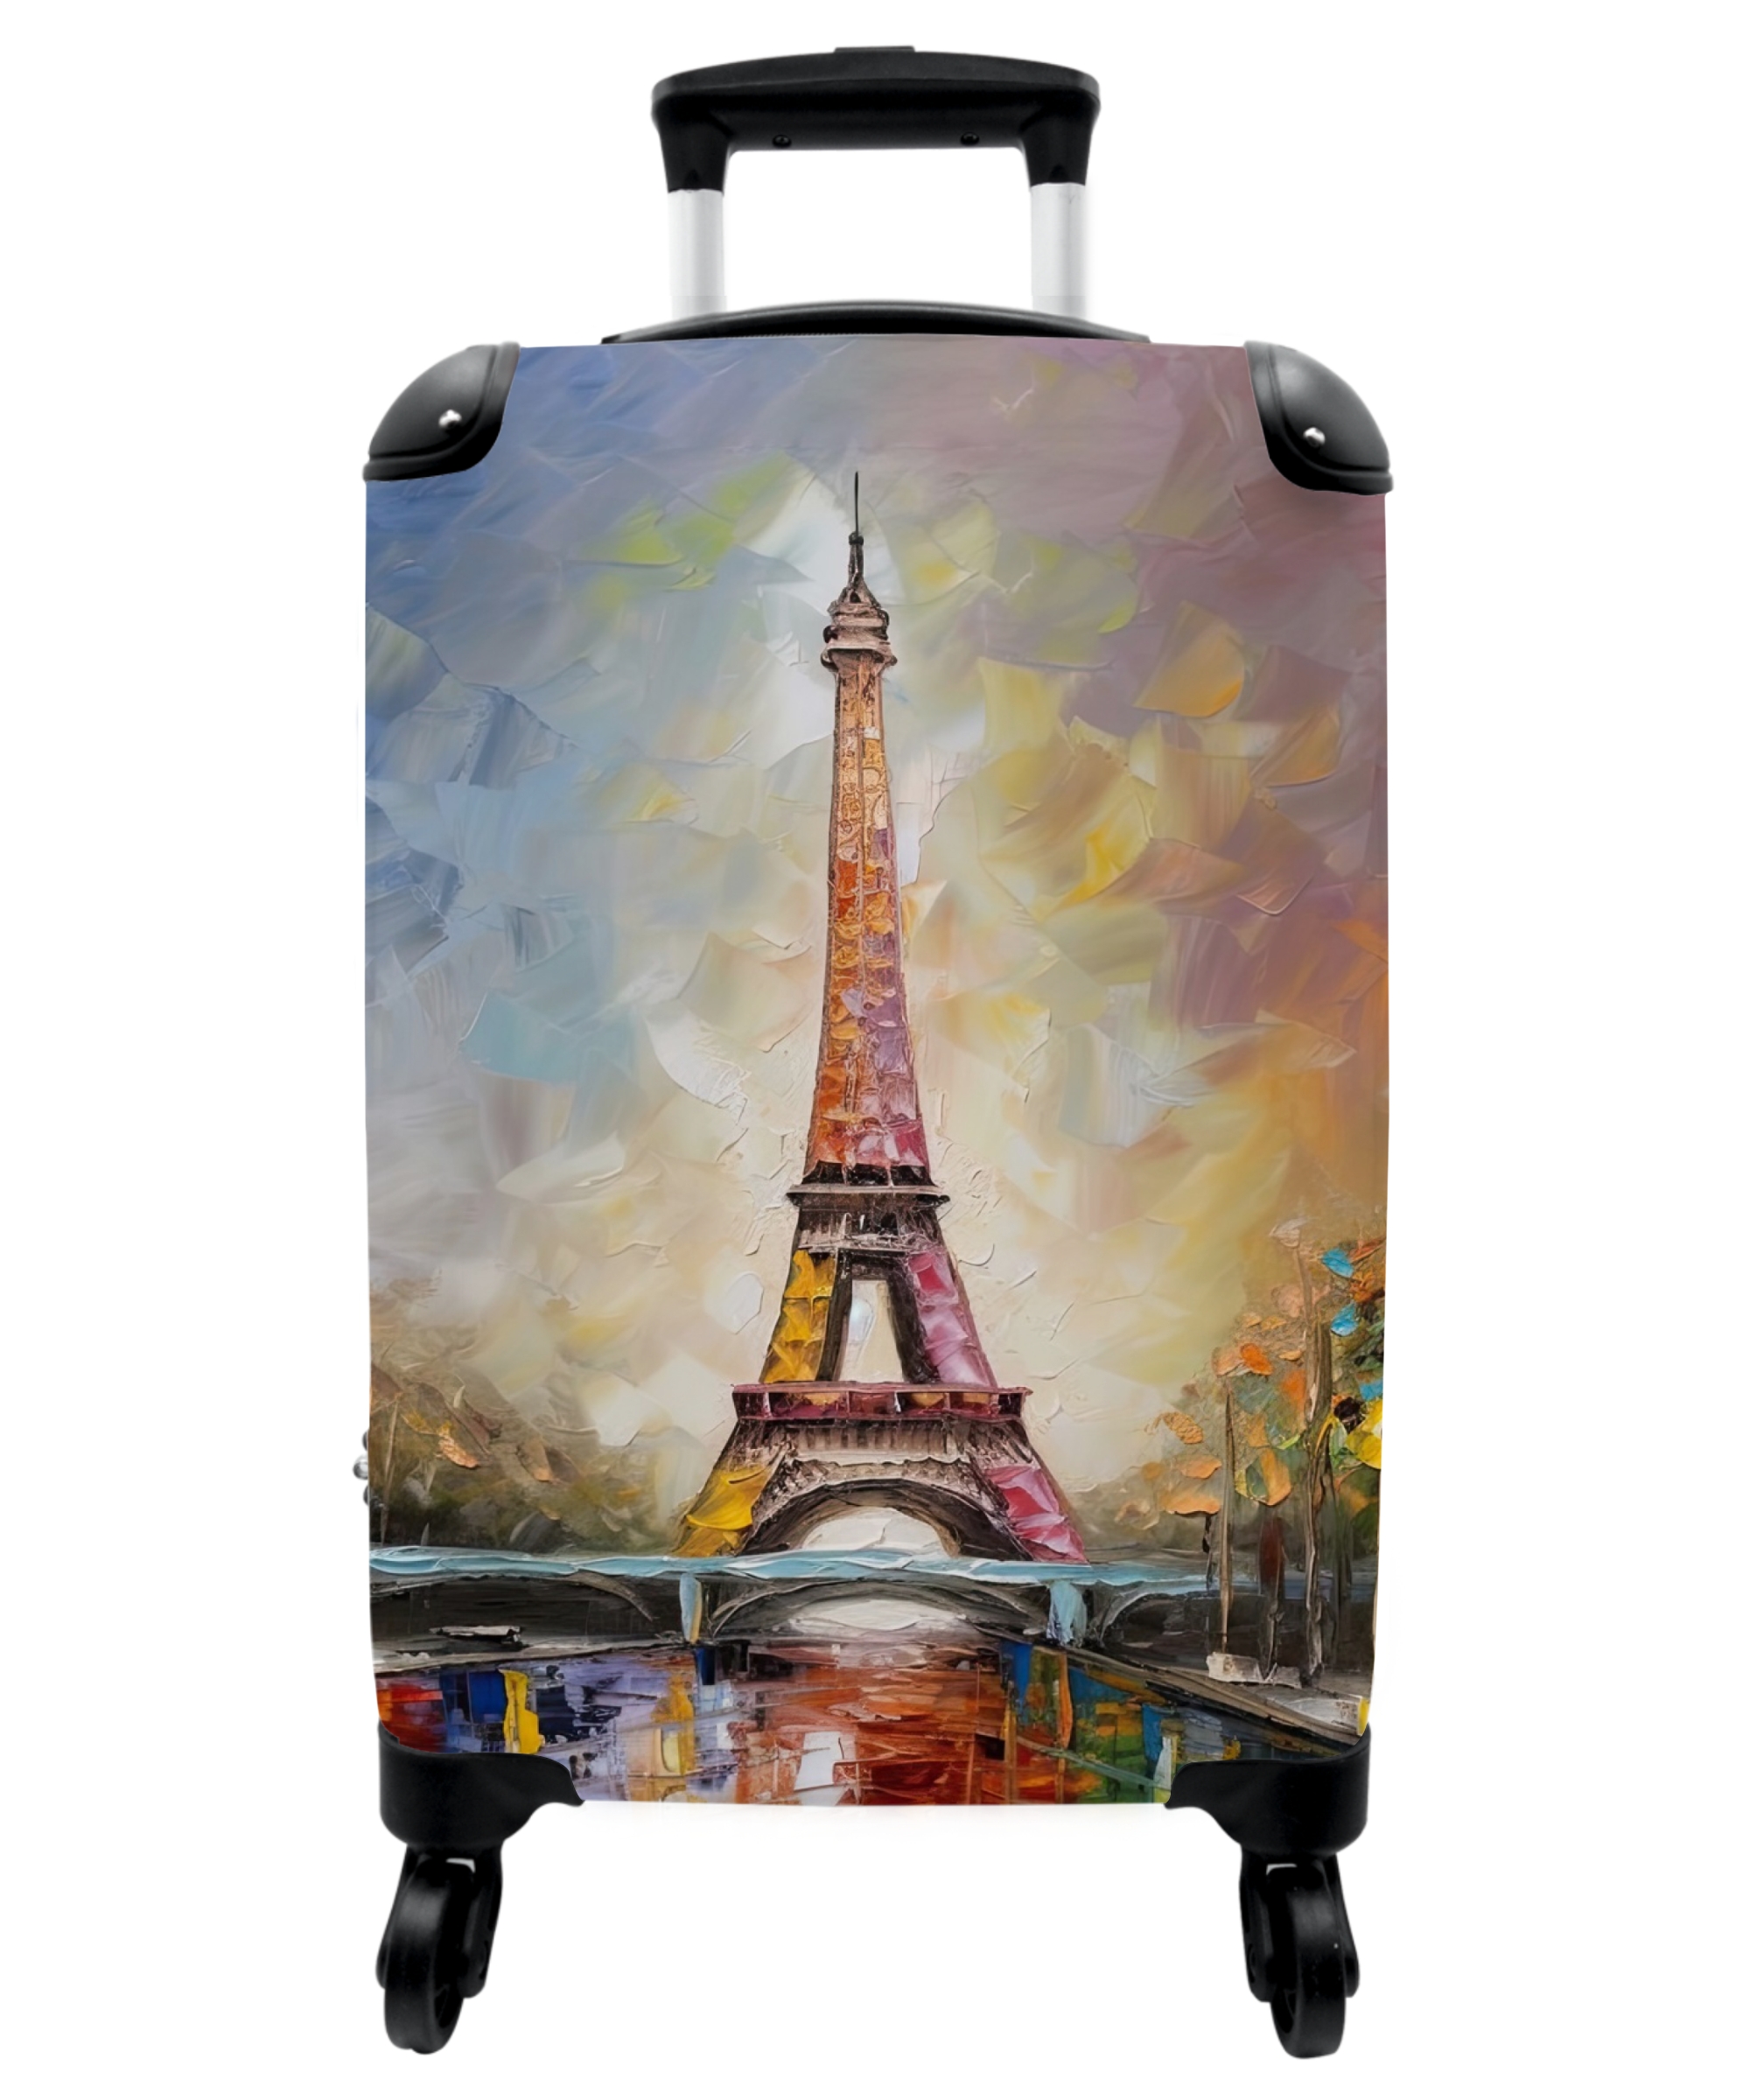 Koffer - Eiffeltoren - Schilderij - Olieverf - Parijs